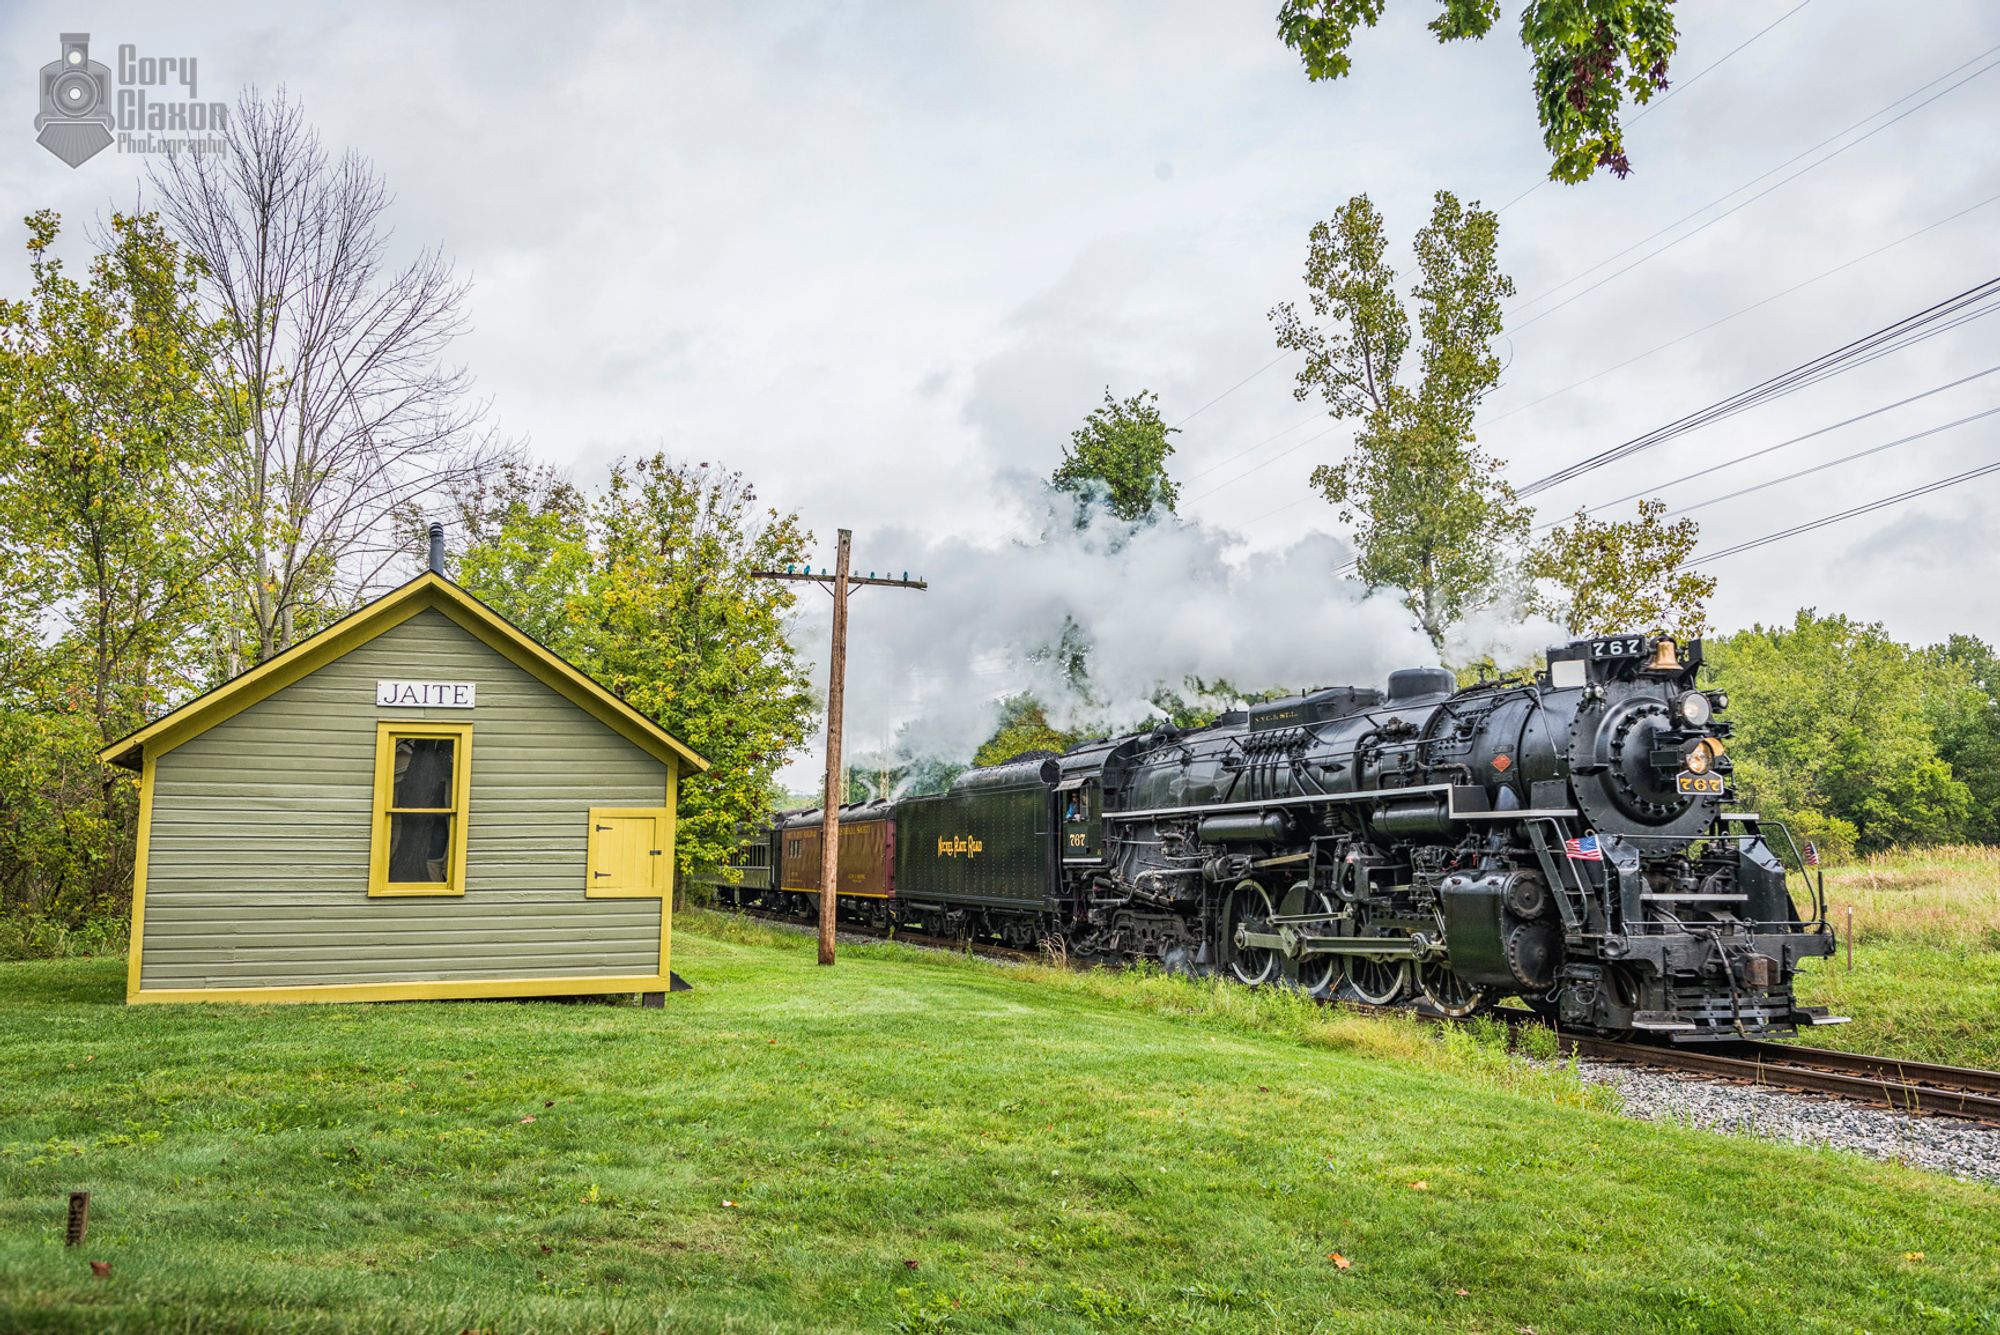 Ohio Heritage Railroads